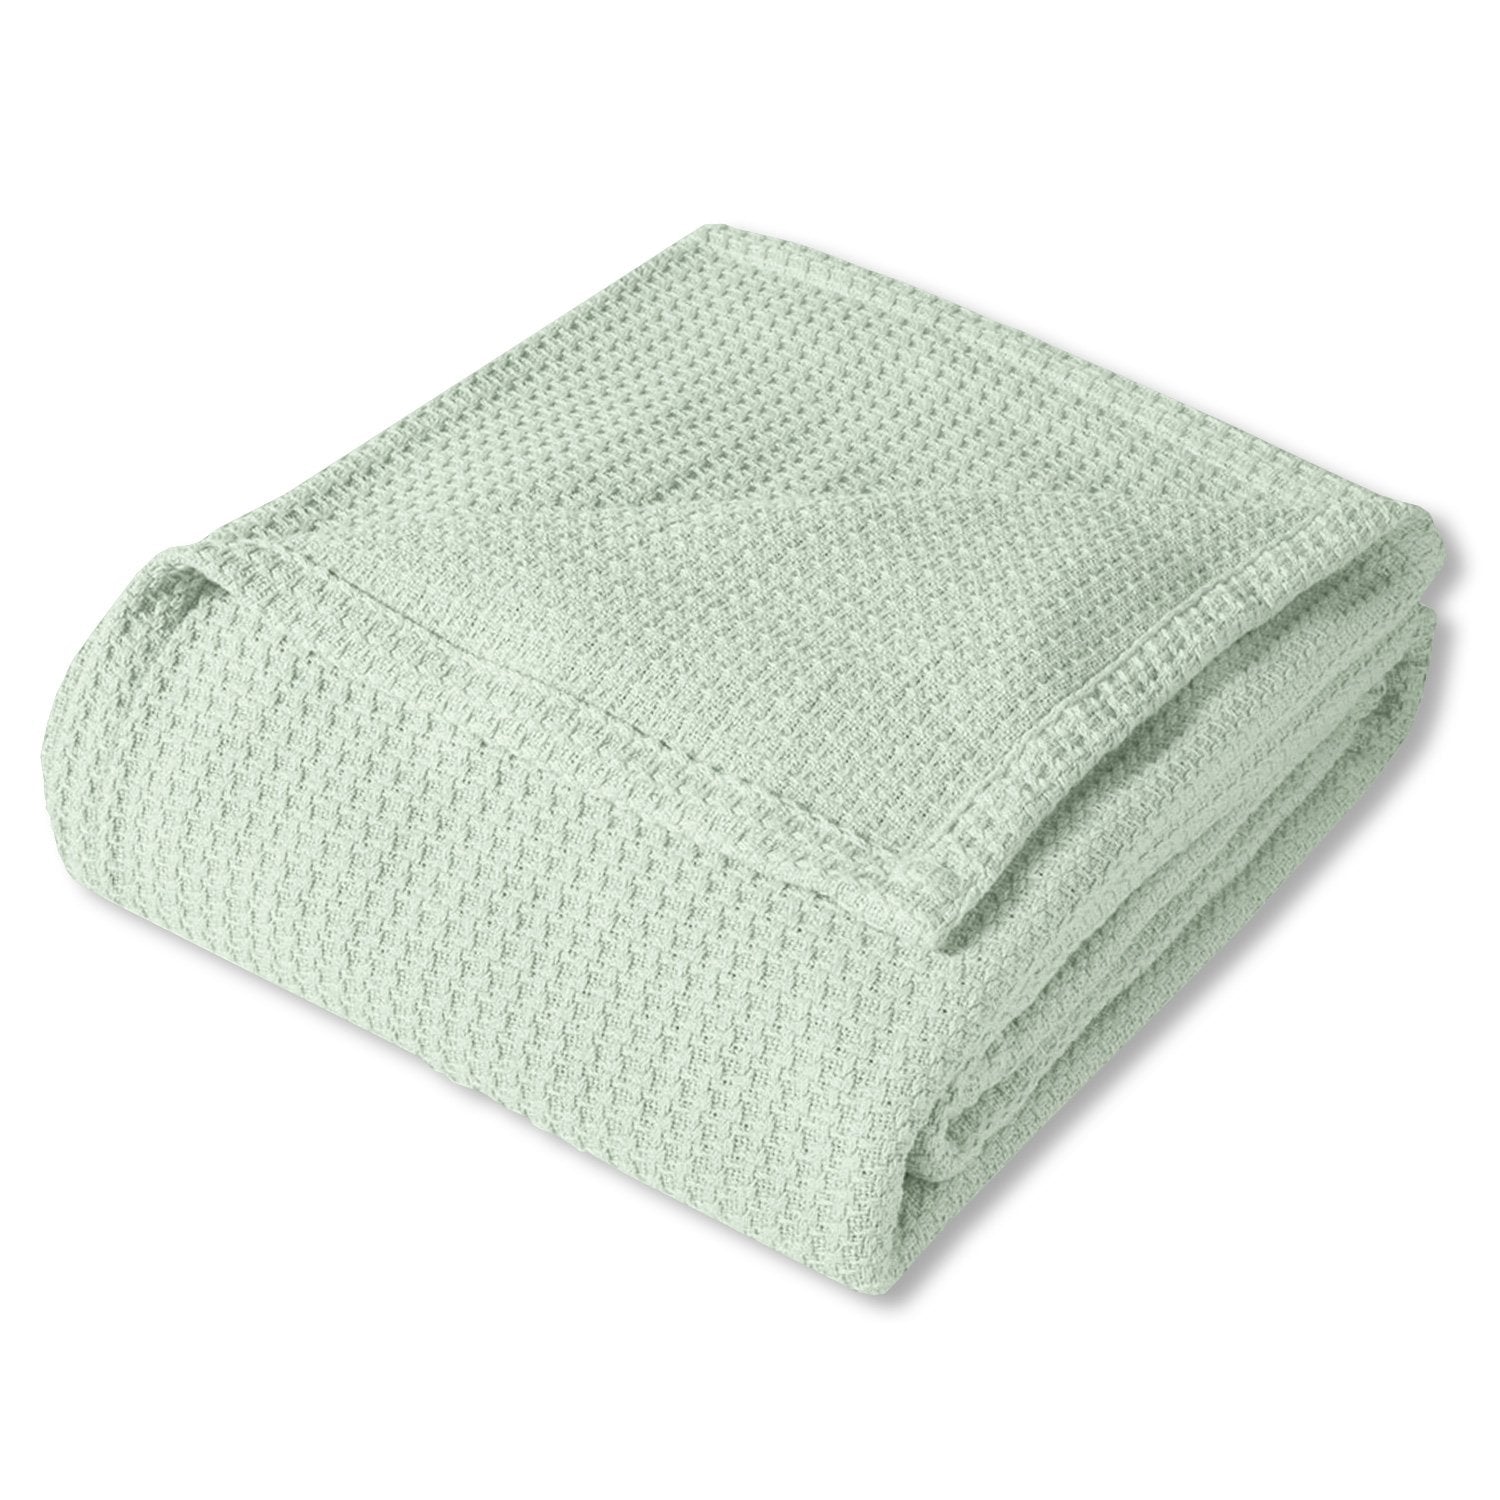 Basket Weave Cotton Blanket Mint - Folded